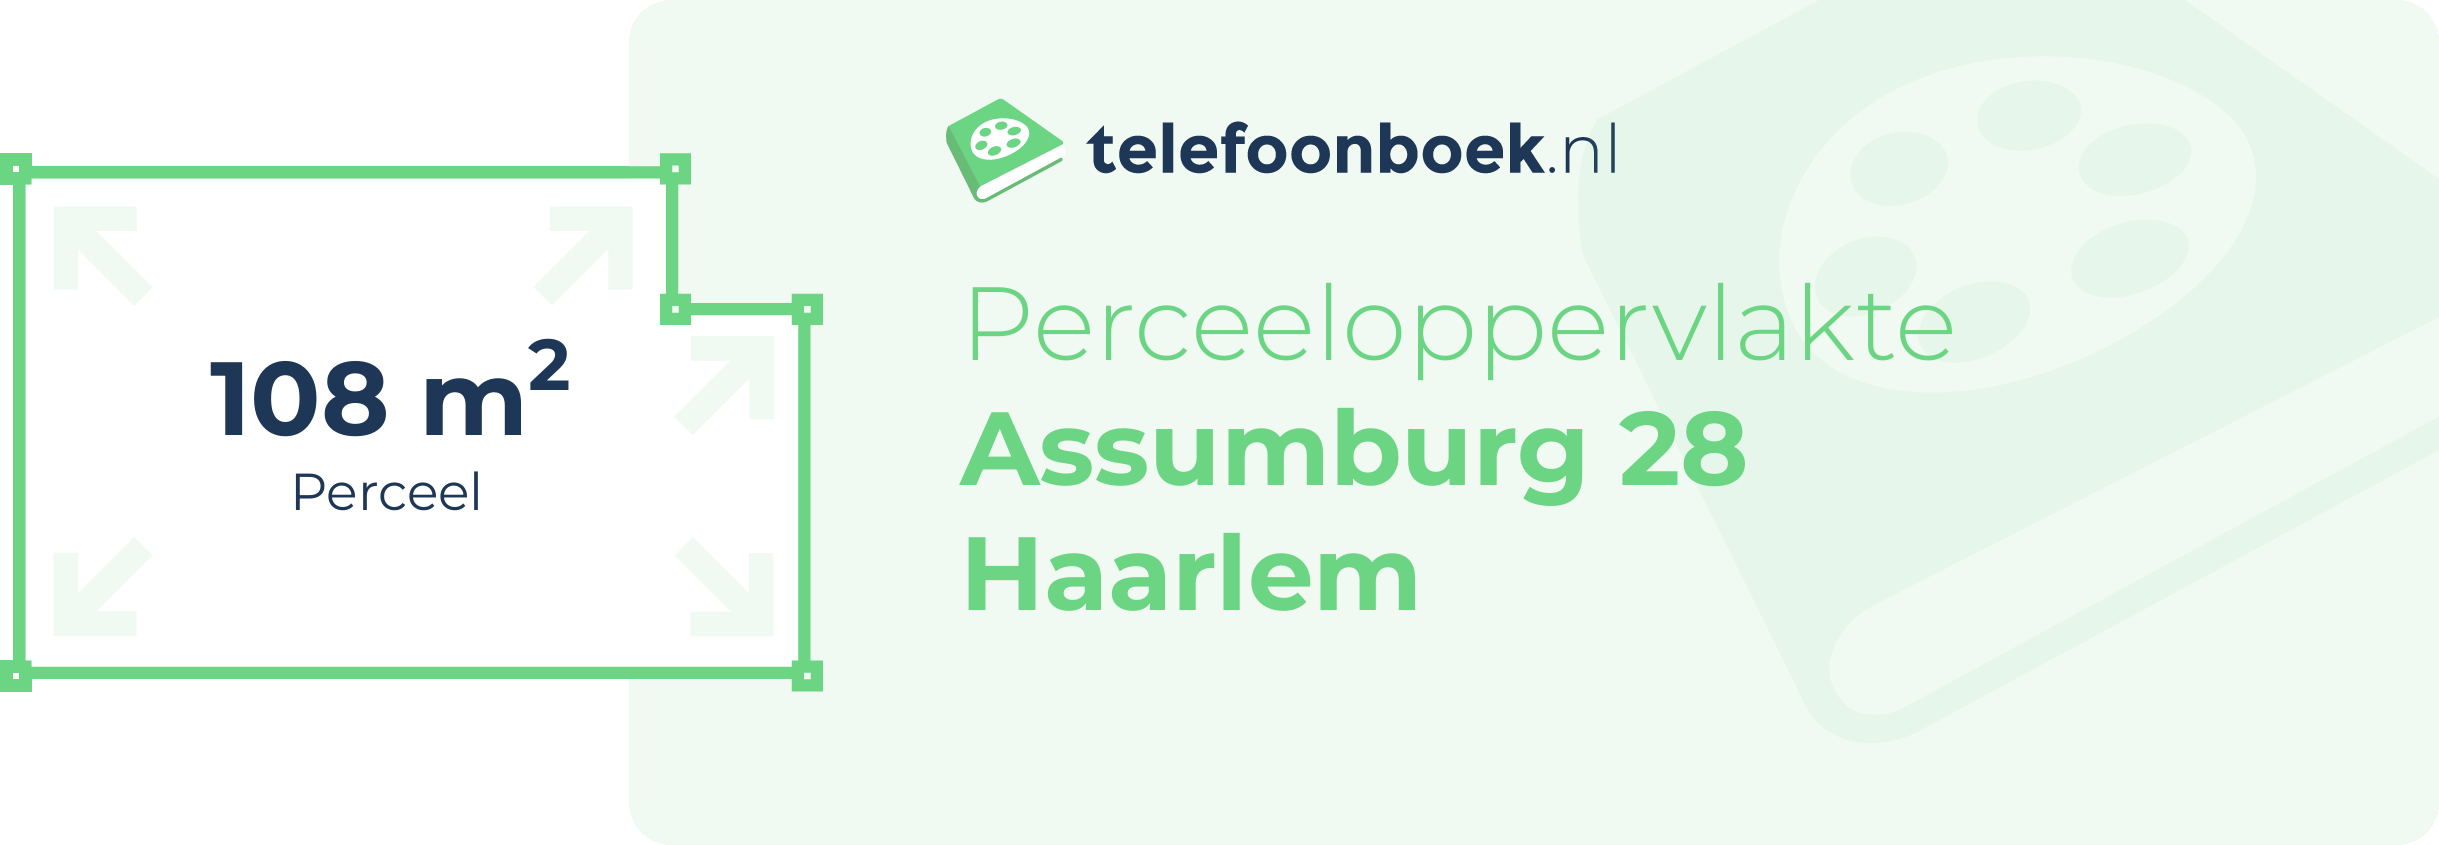 Perceeloppervlakte Assumburg 28 Haarlem